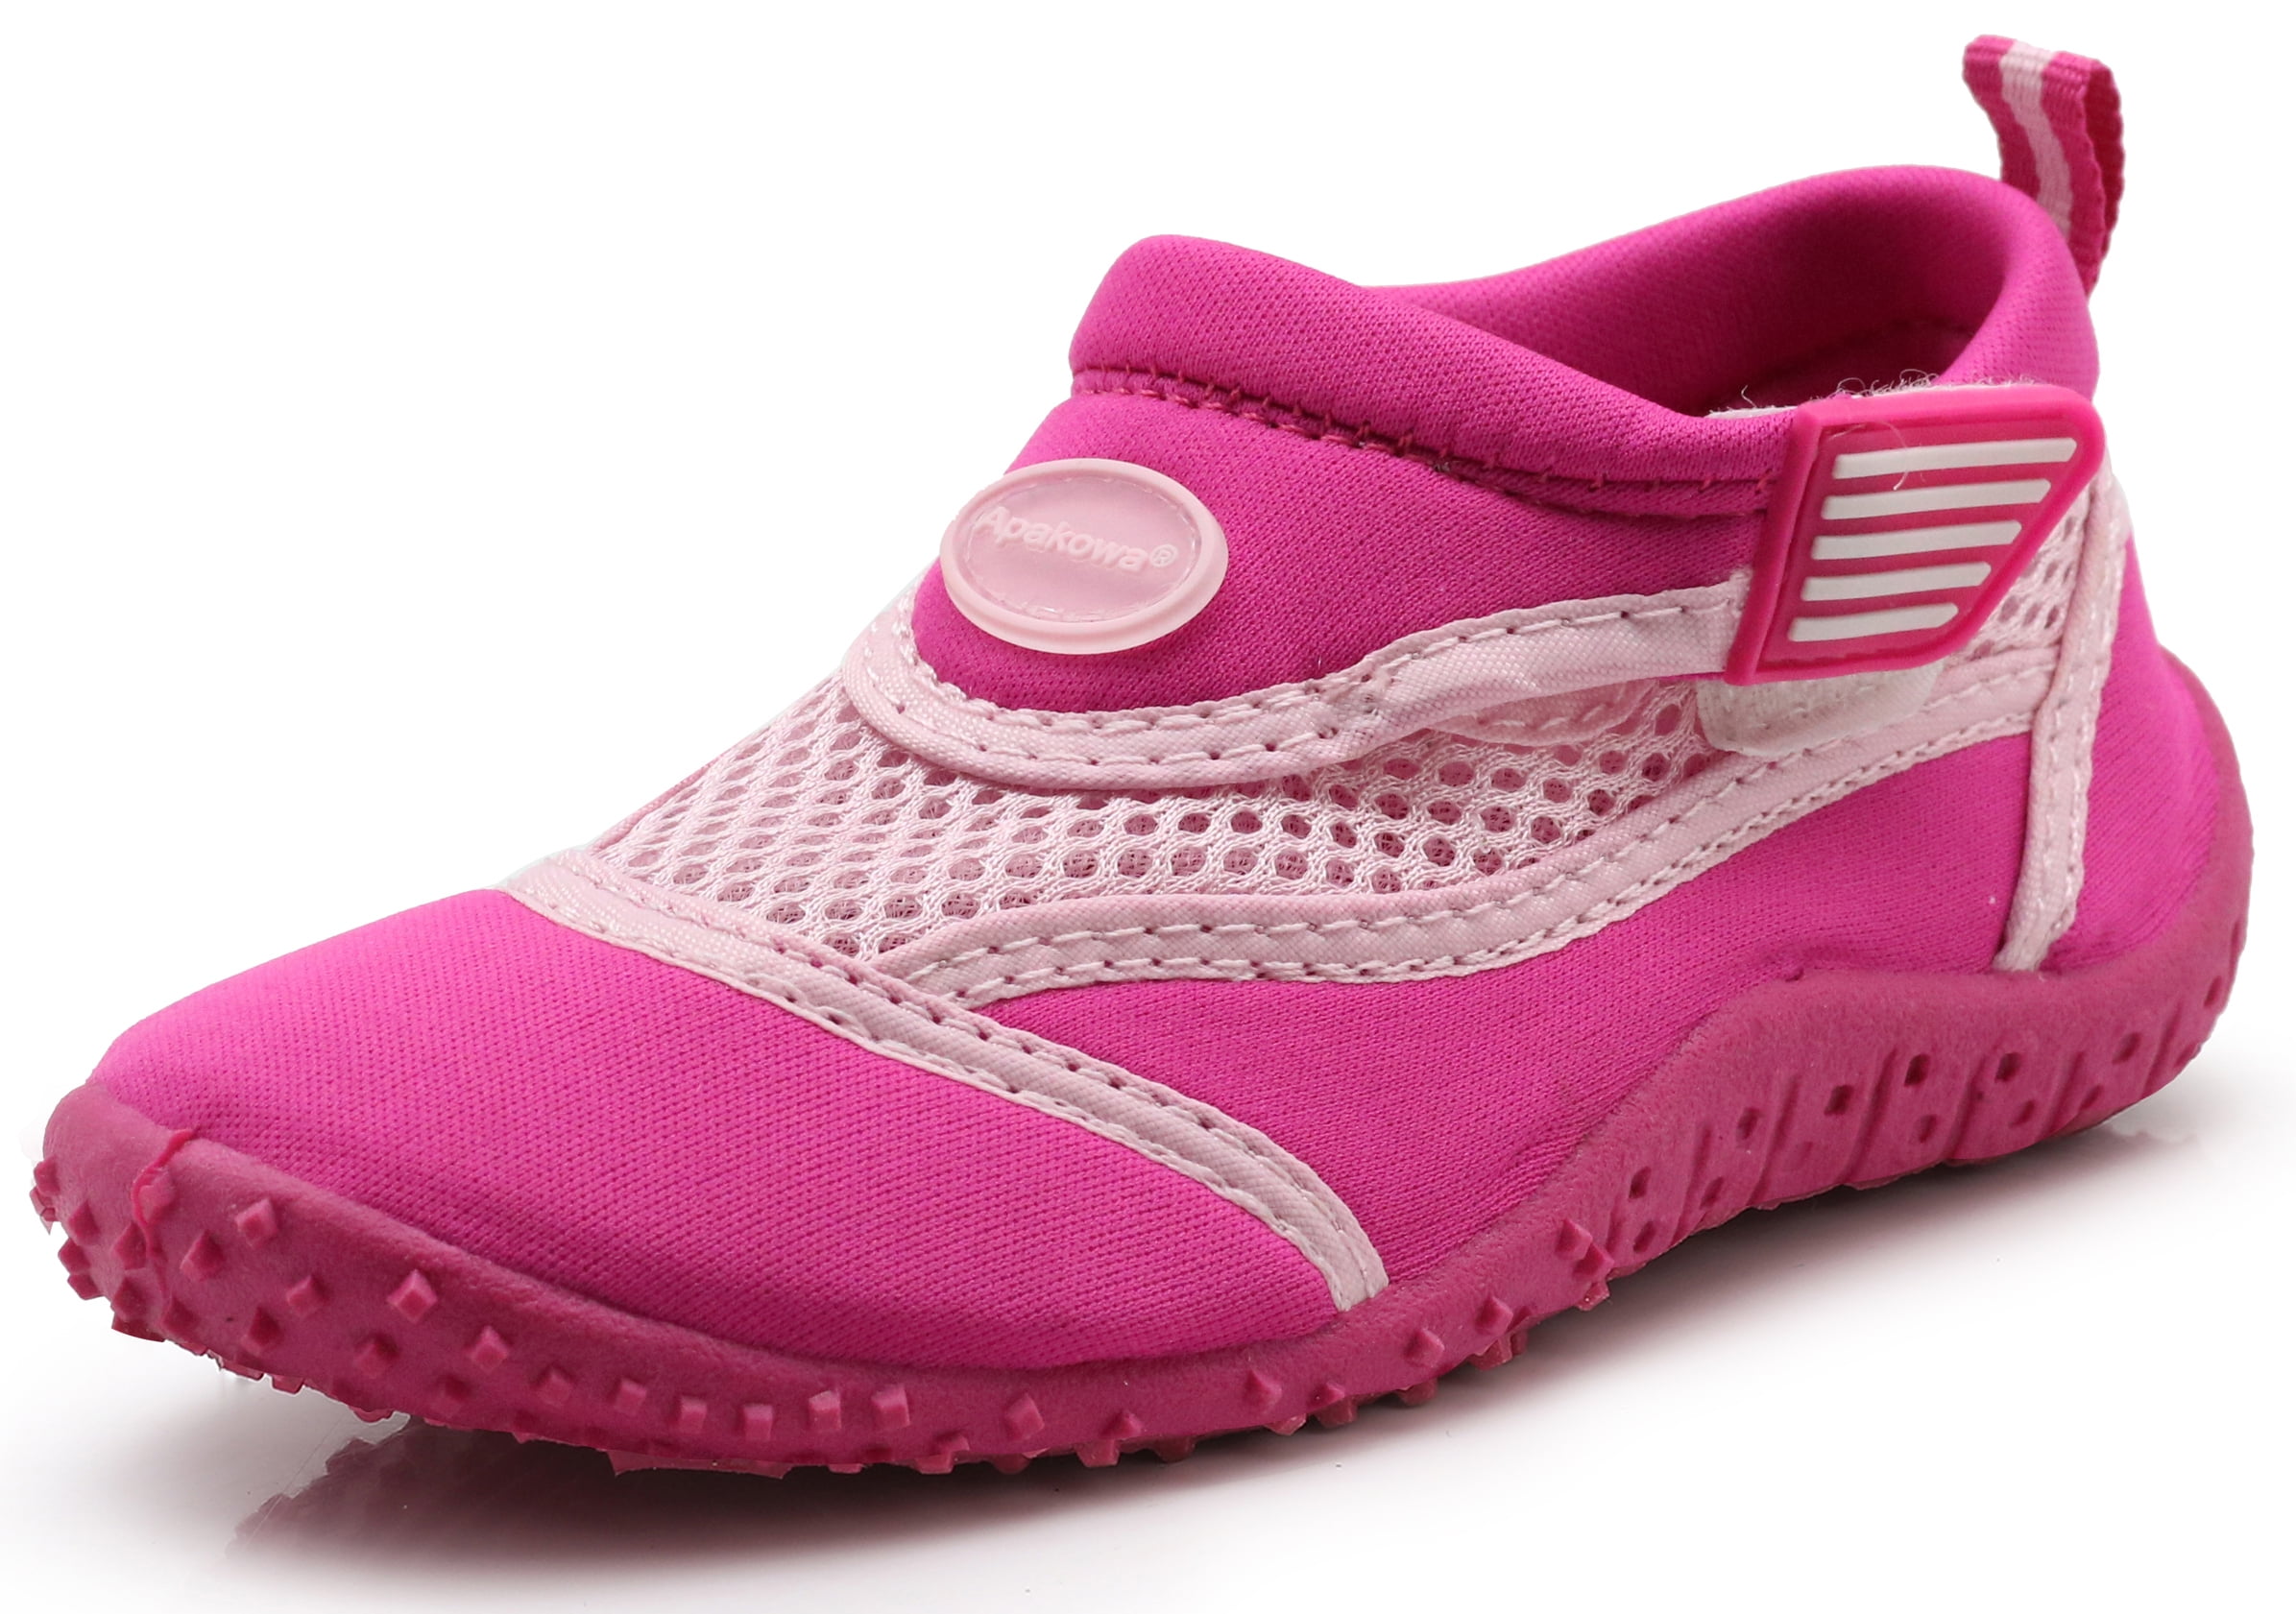 Fantiny Boys & Girls Water Shoes Lightweight Comfort Sole Easy Walking Athletic Slip on Aqua Sock Toddler/Little Kid/Big Kid